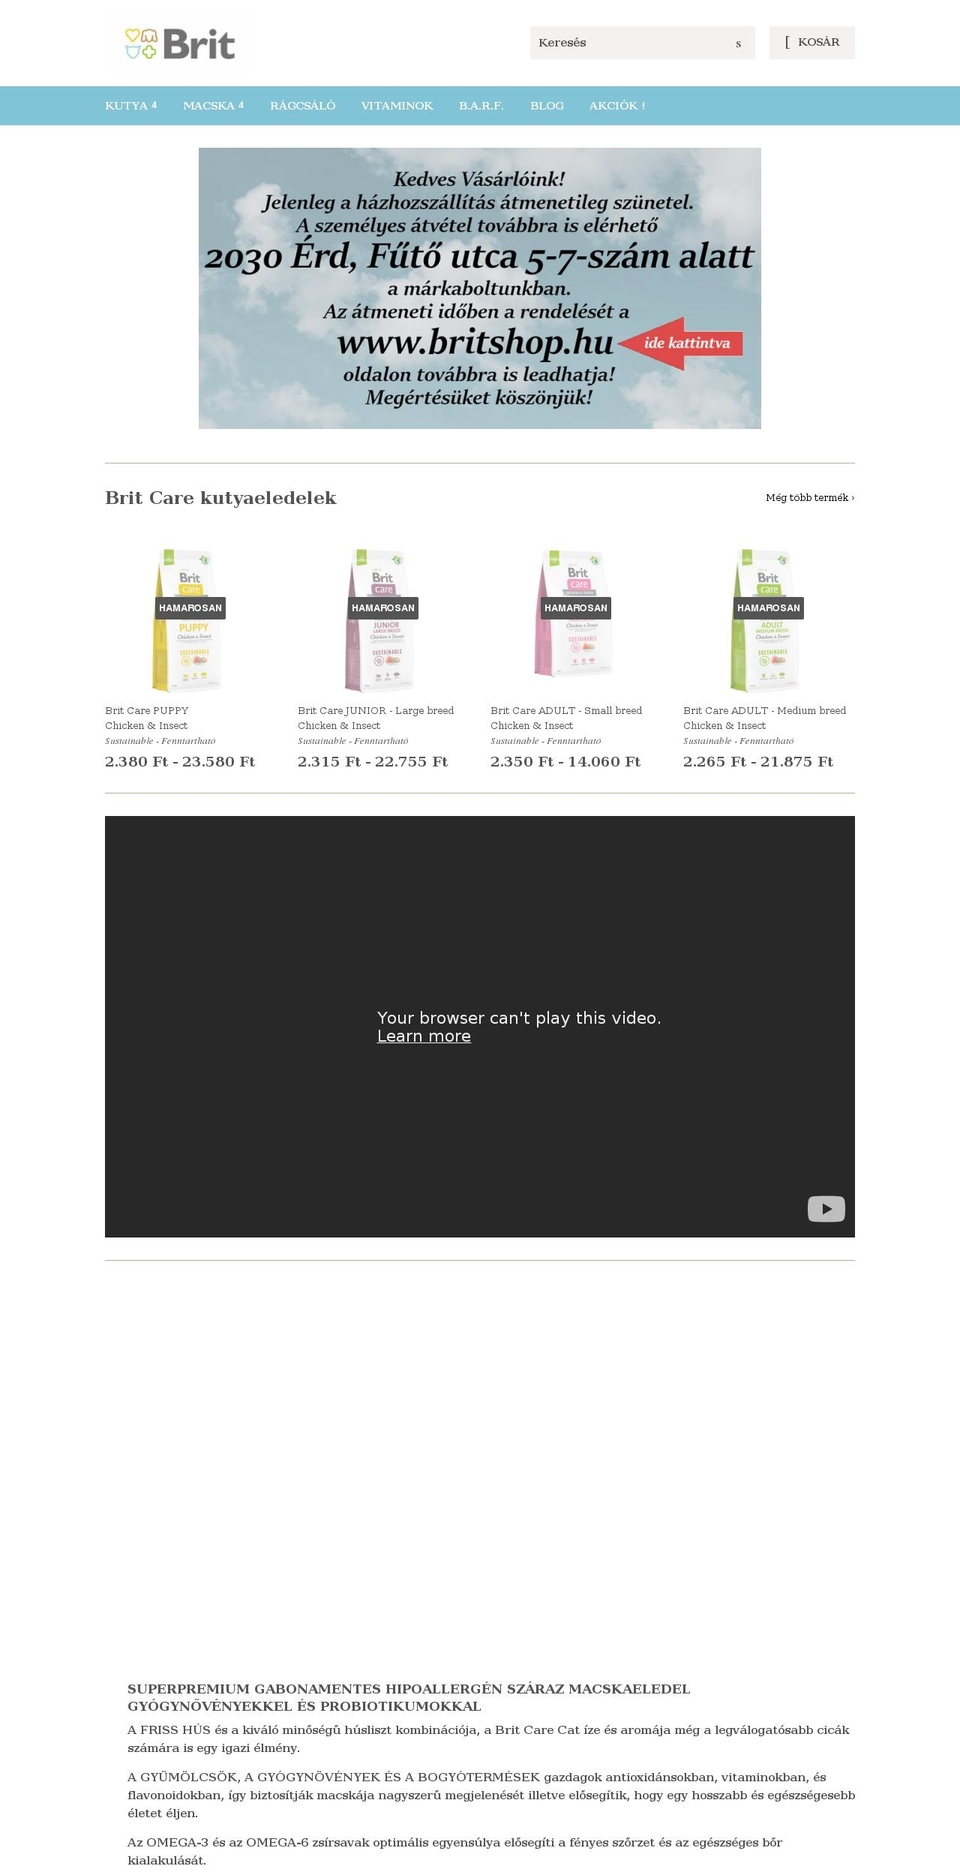 brit.hu shopify website screenshot